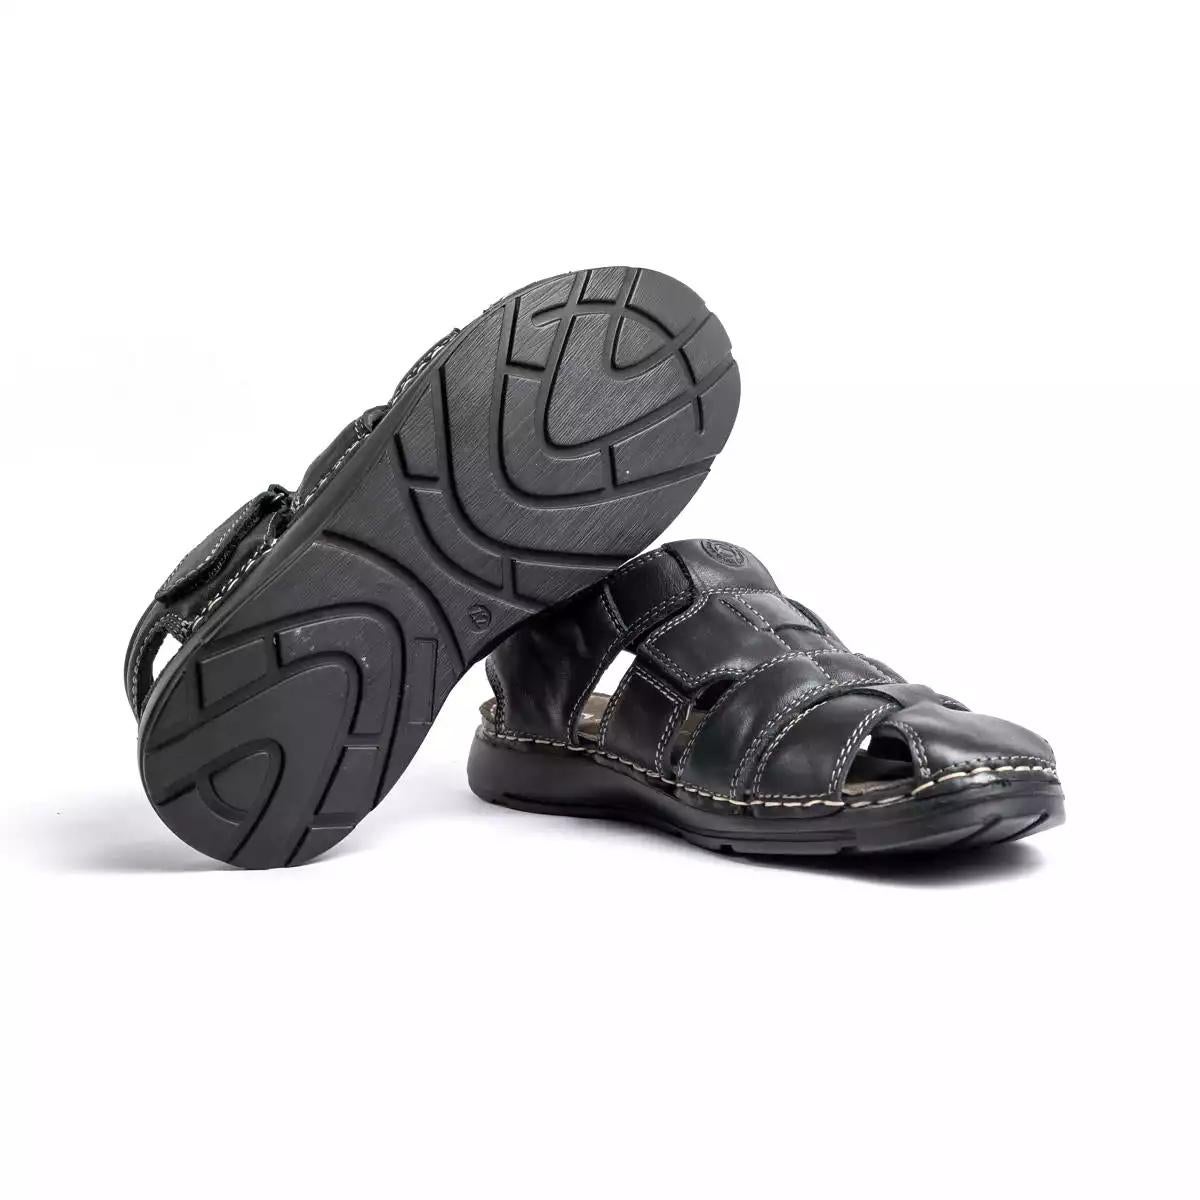 Men Leather Casual Sandals ǀ ADVENTURE 6413